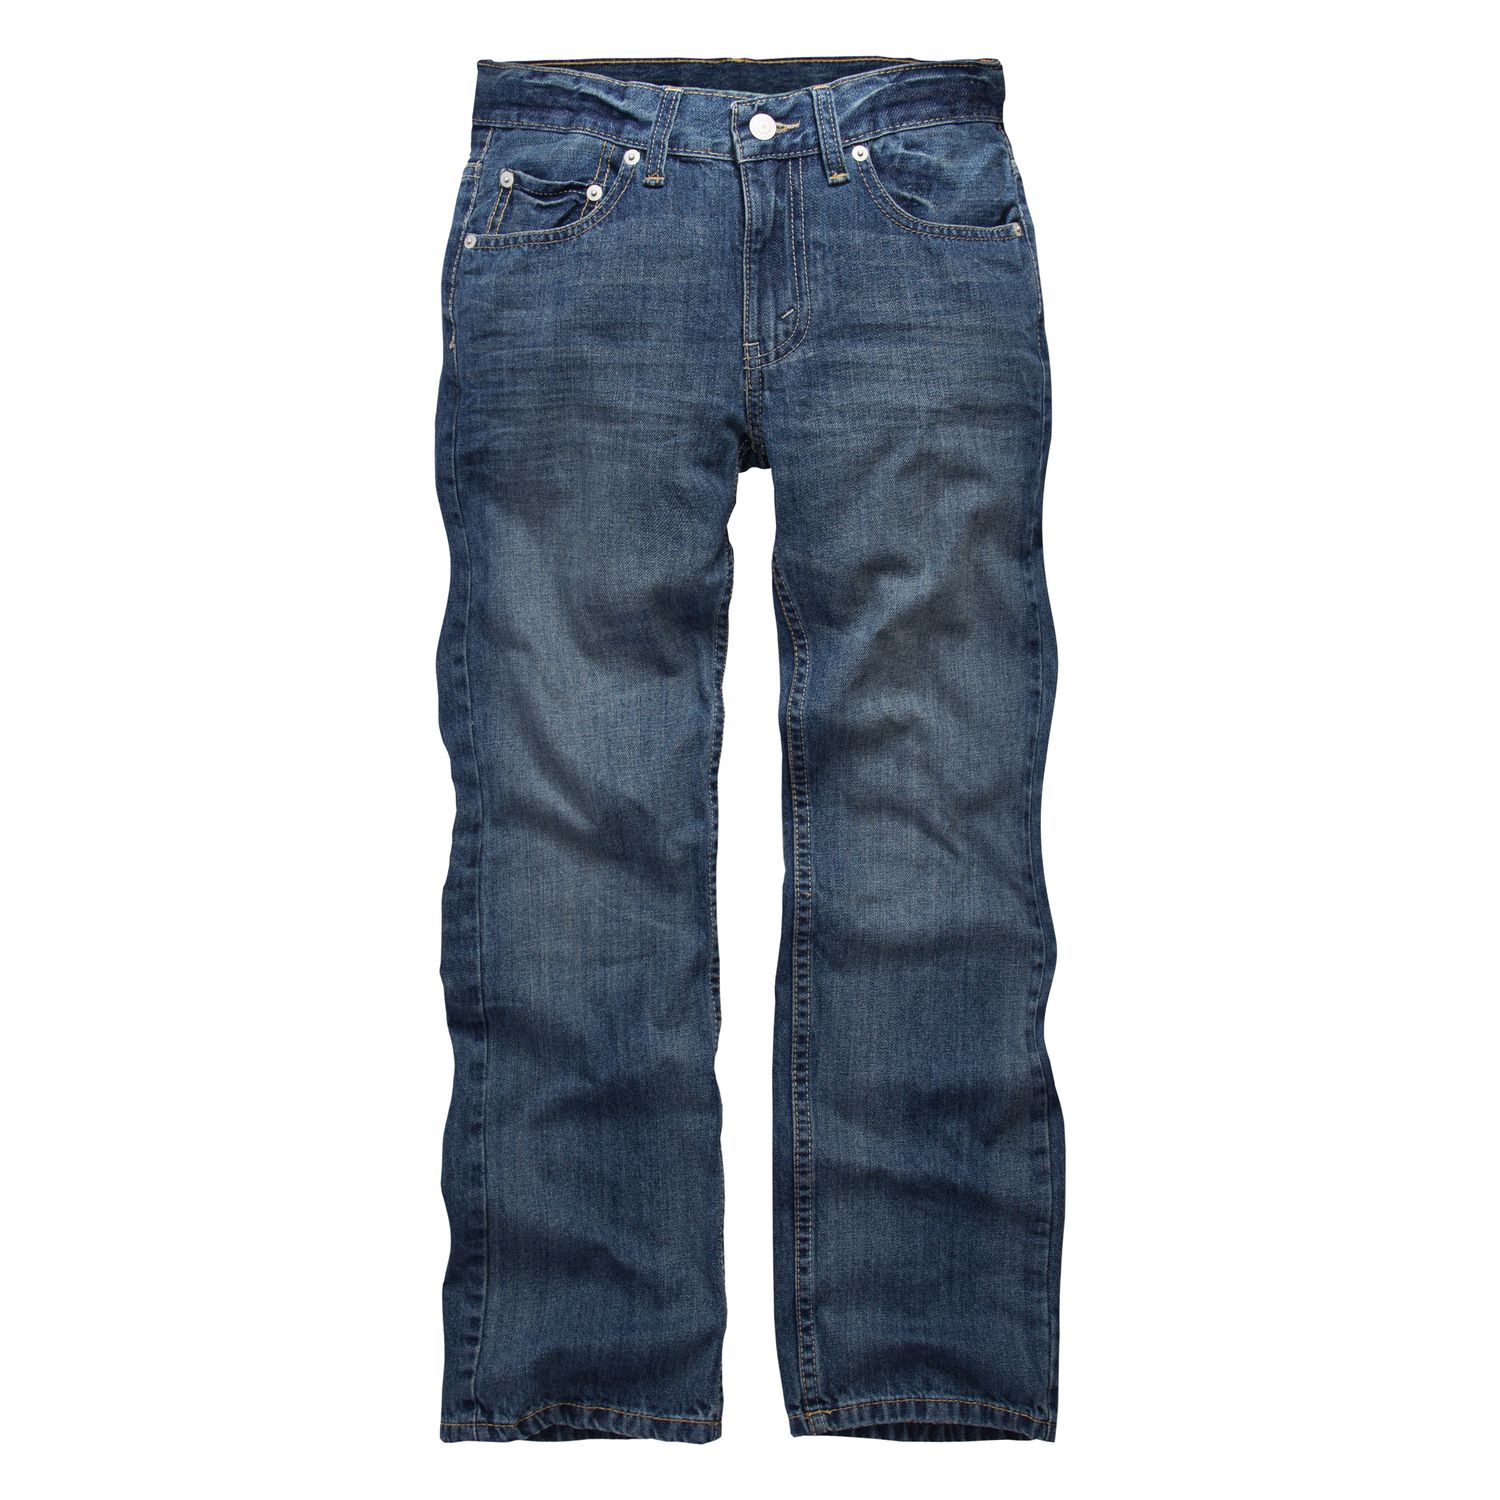 levis 505 husky jeans